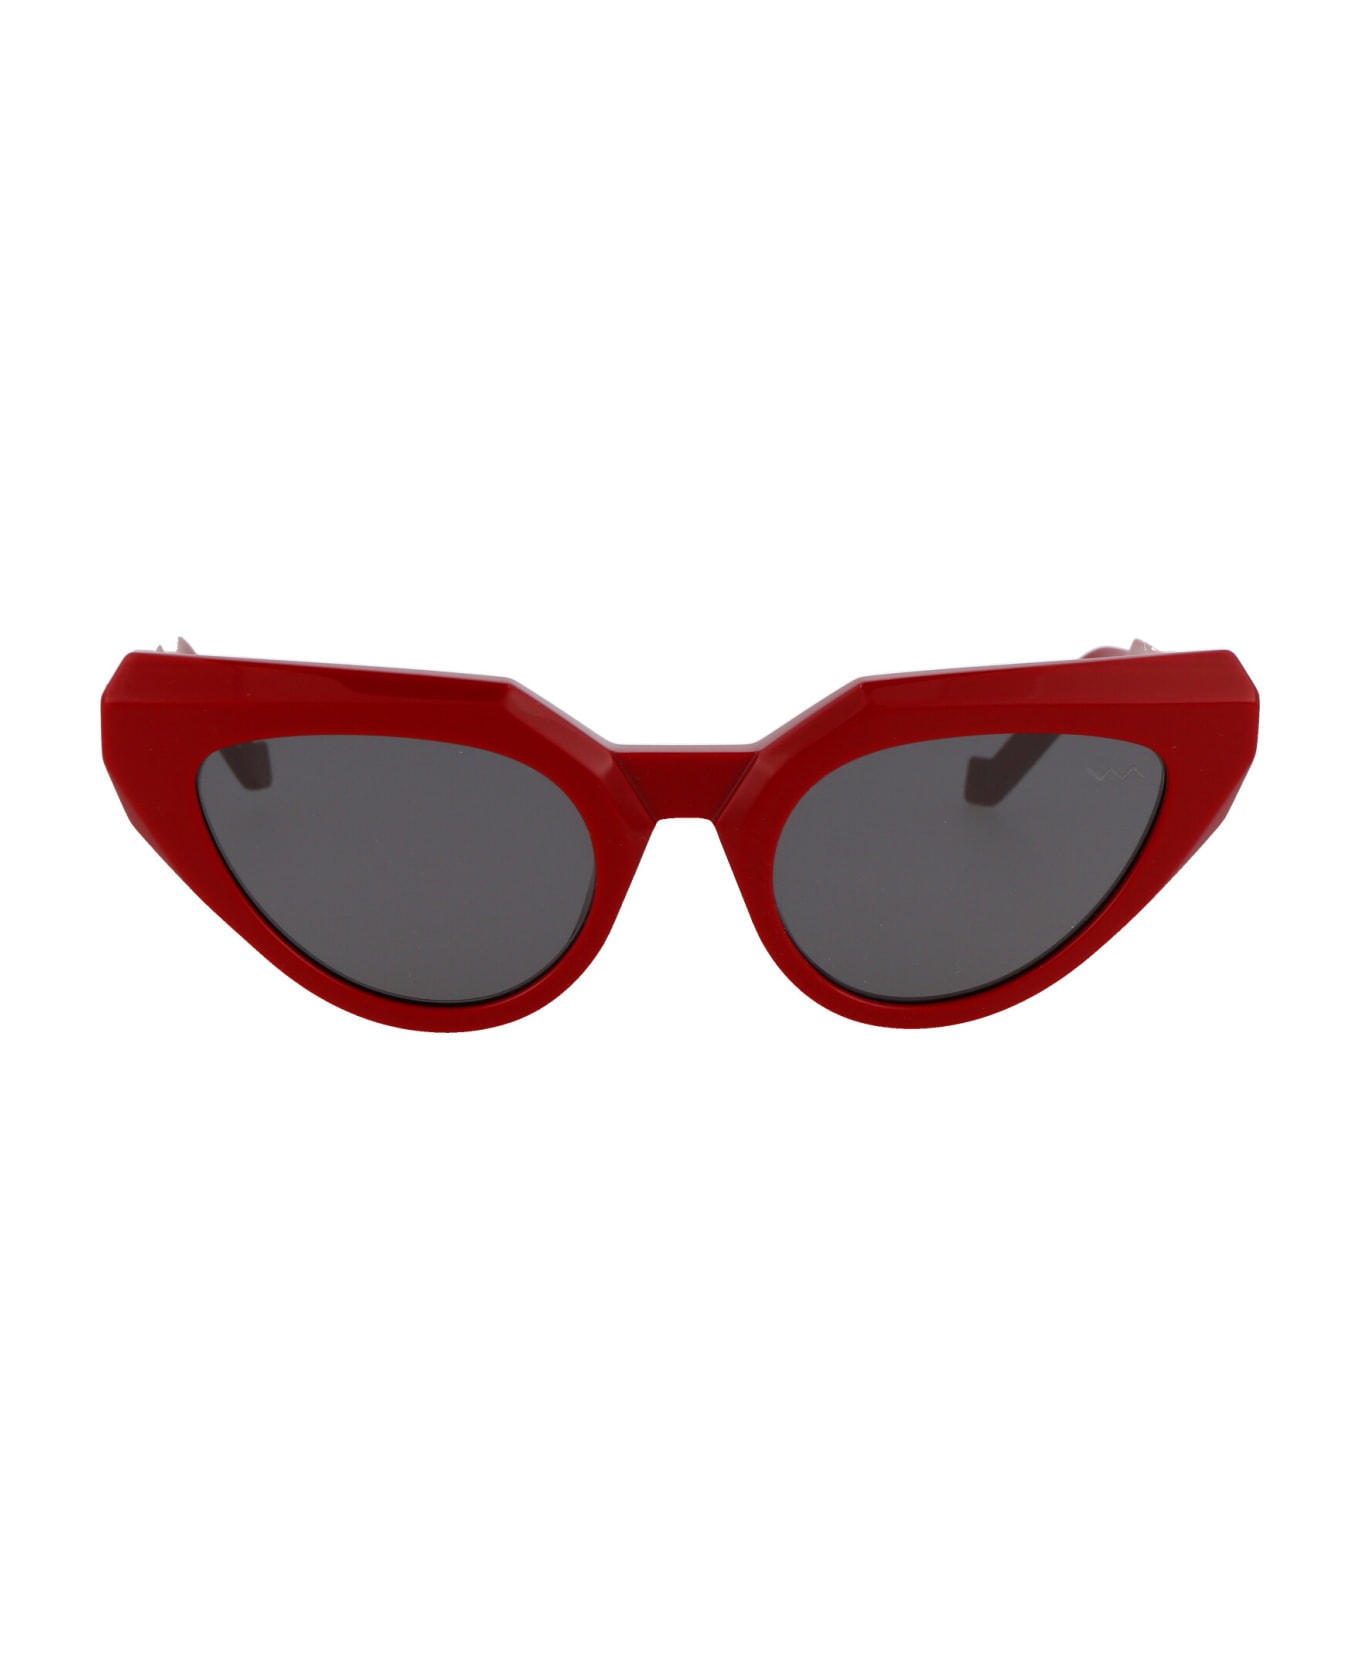 VAVA Bl0028 Sunglasses - RUDDY|BLACK FLEX HINGES|BLACK LENSES